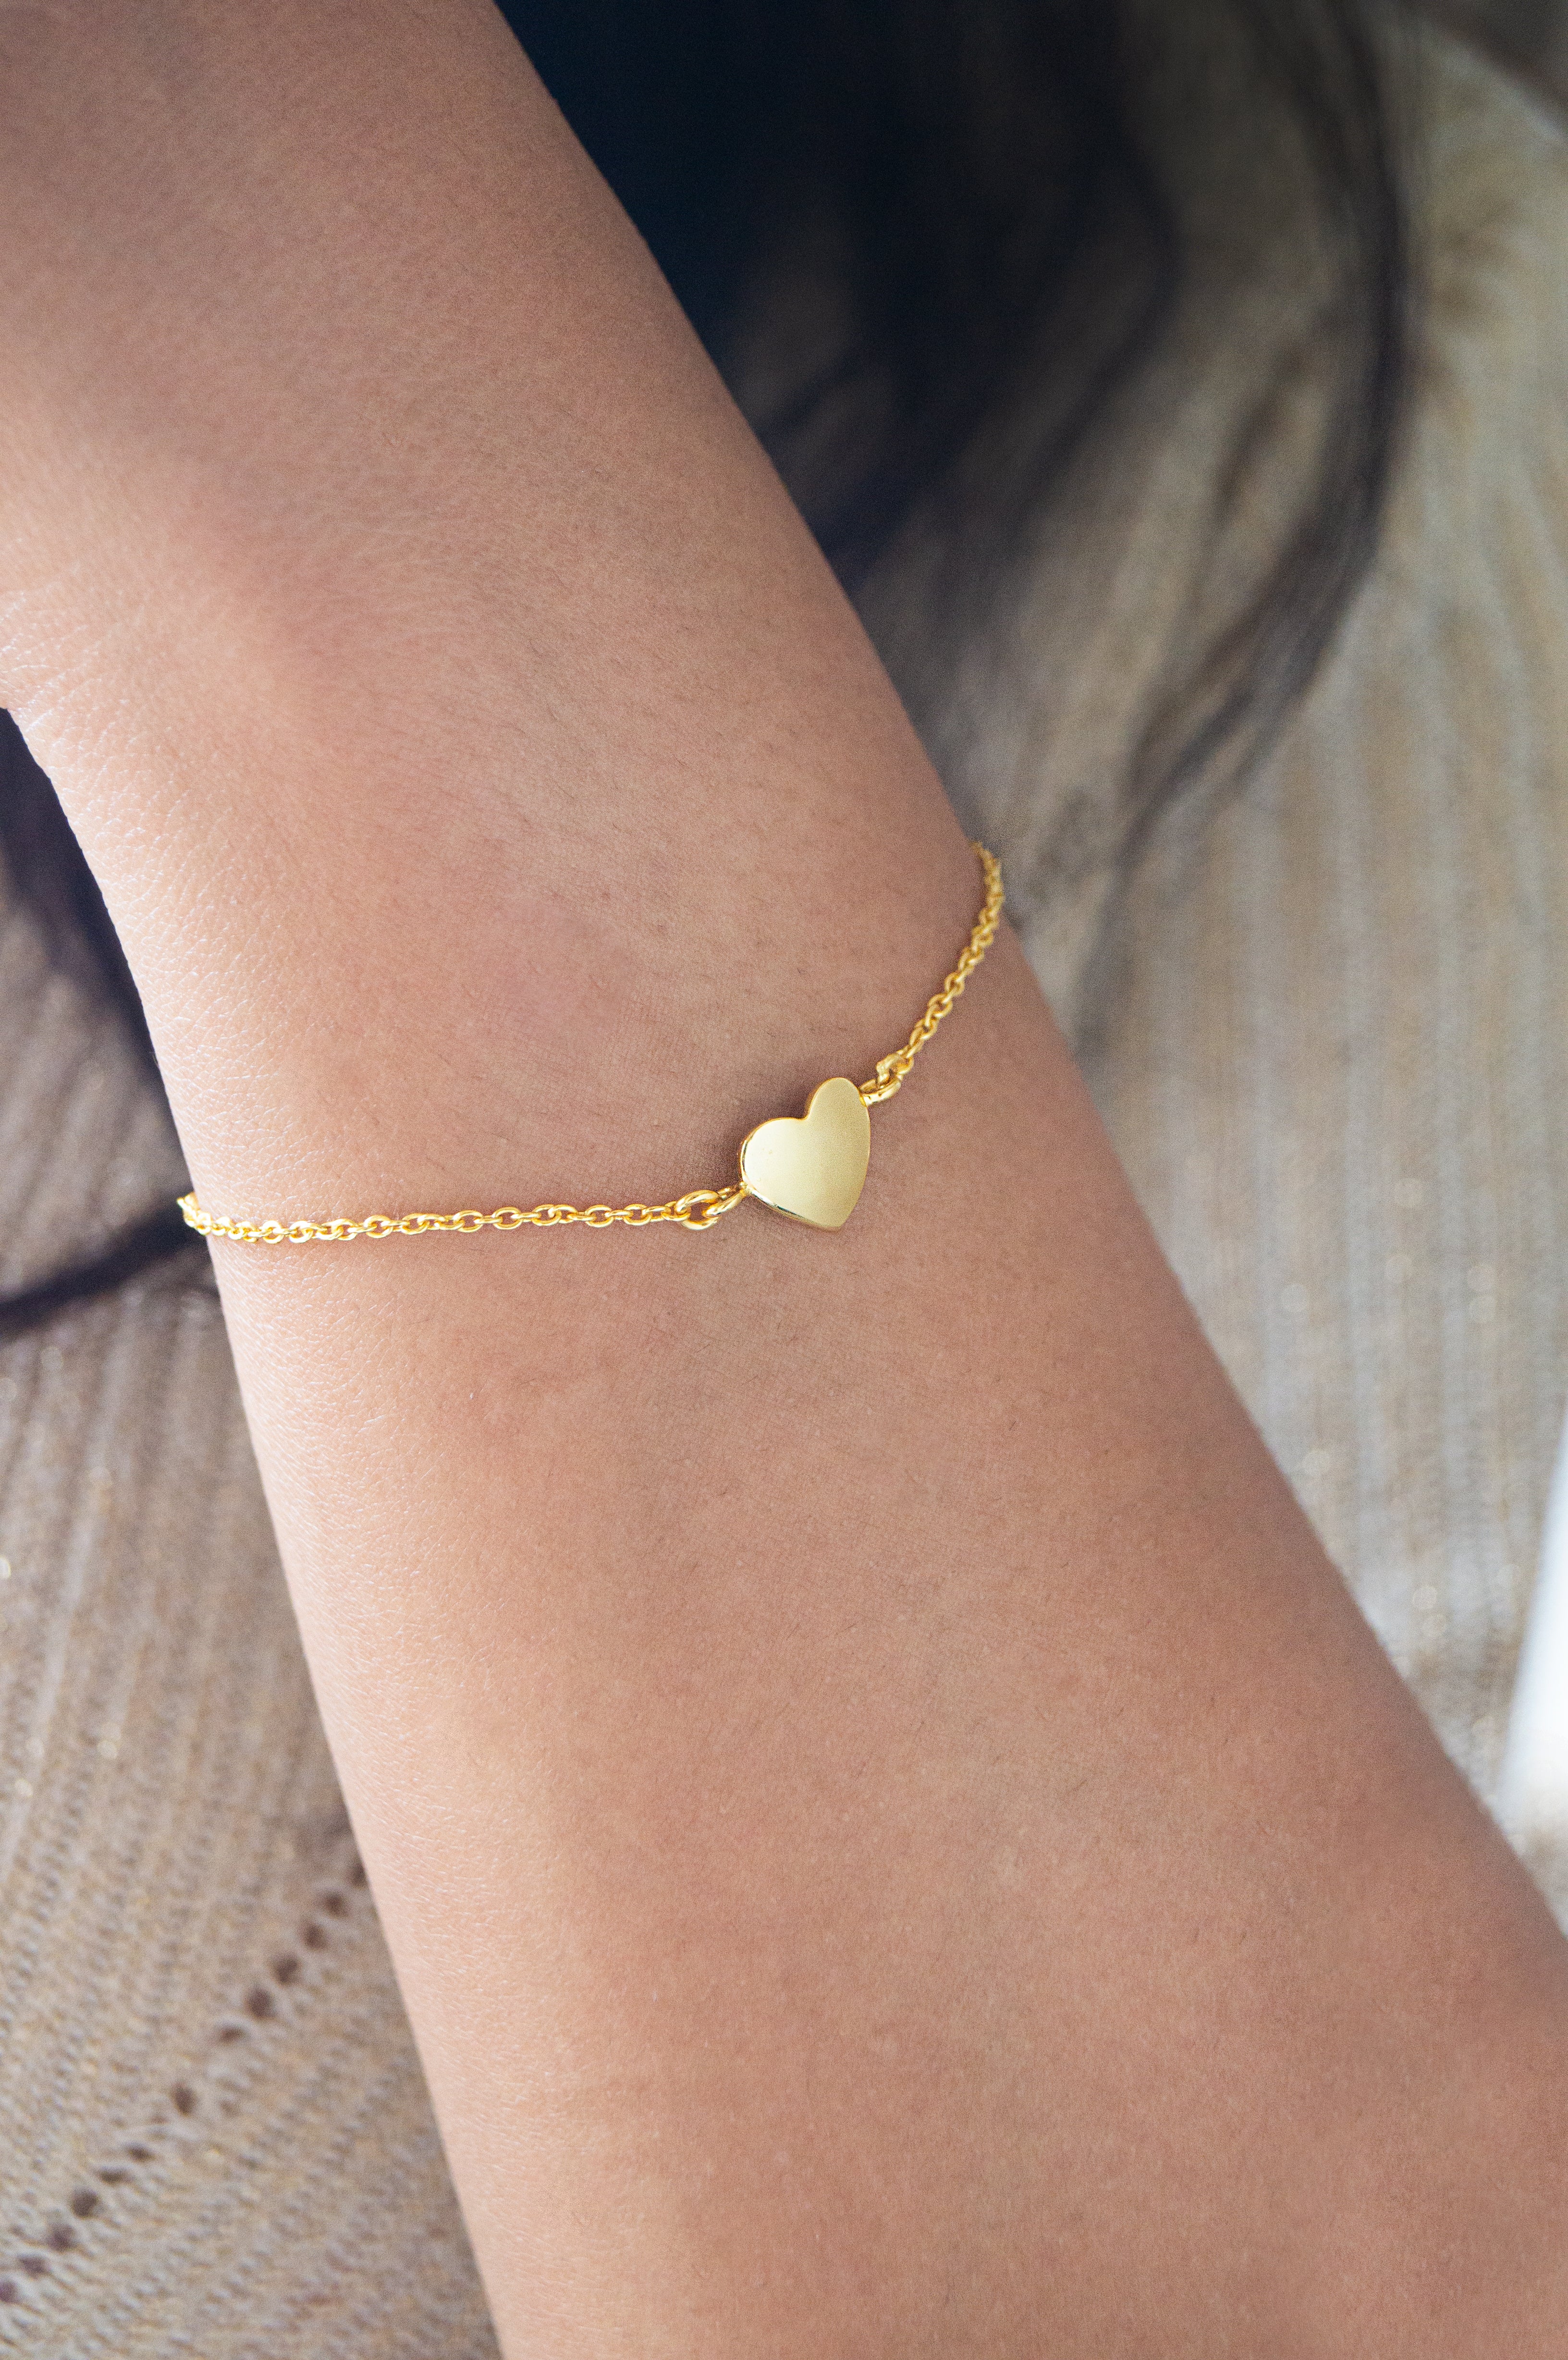 Buy LVYE Chain Bracelet Heart Shape 18K Gold Plated Bronze at Amazonin